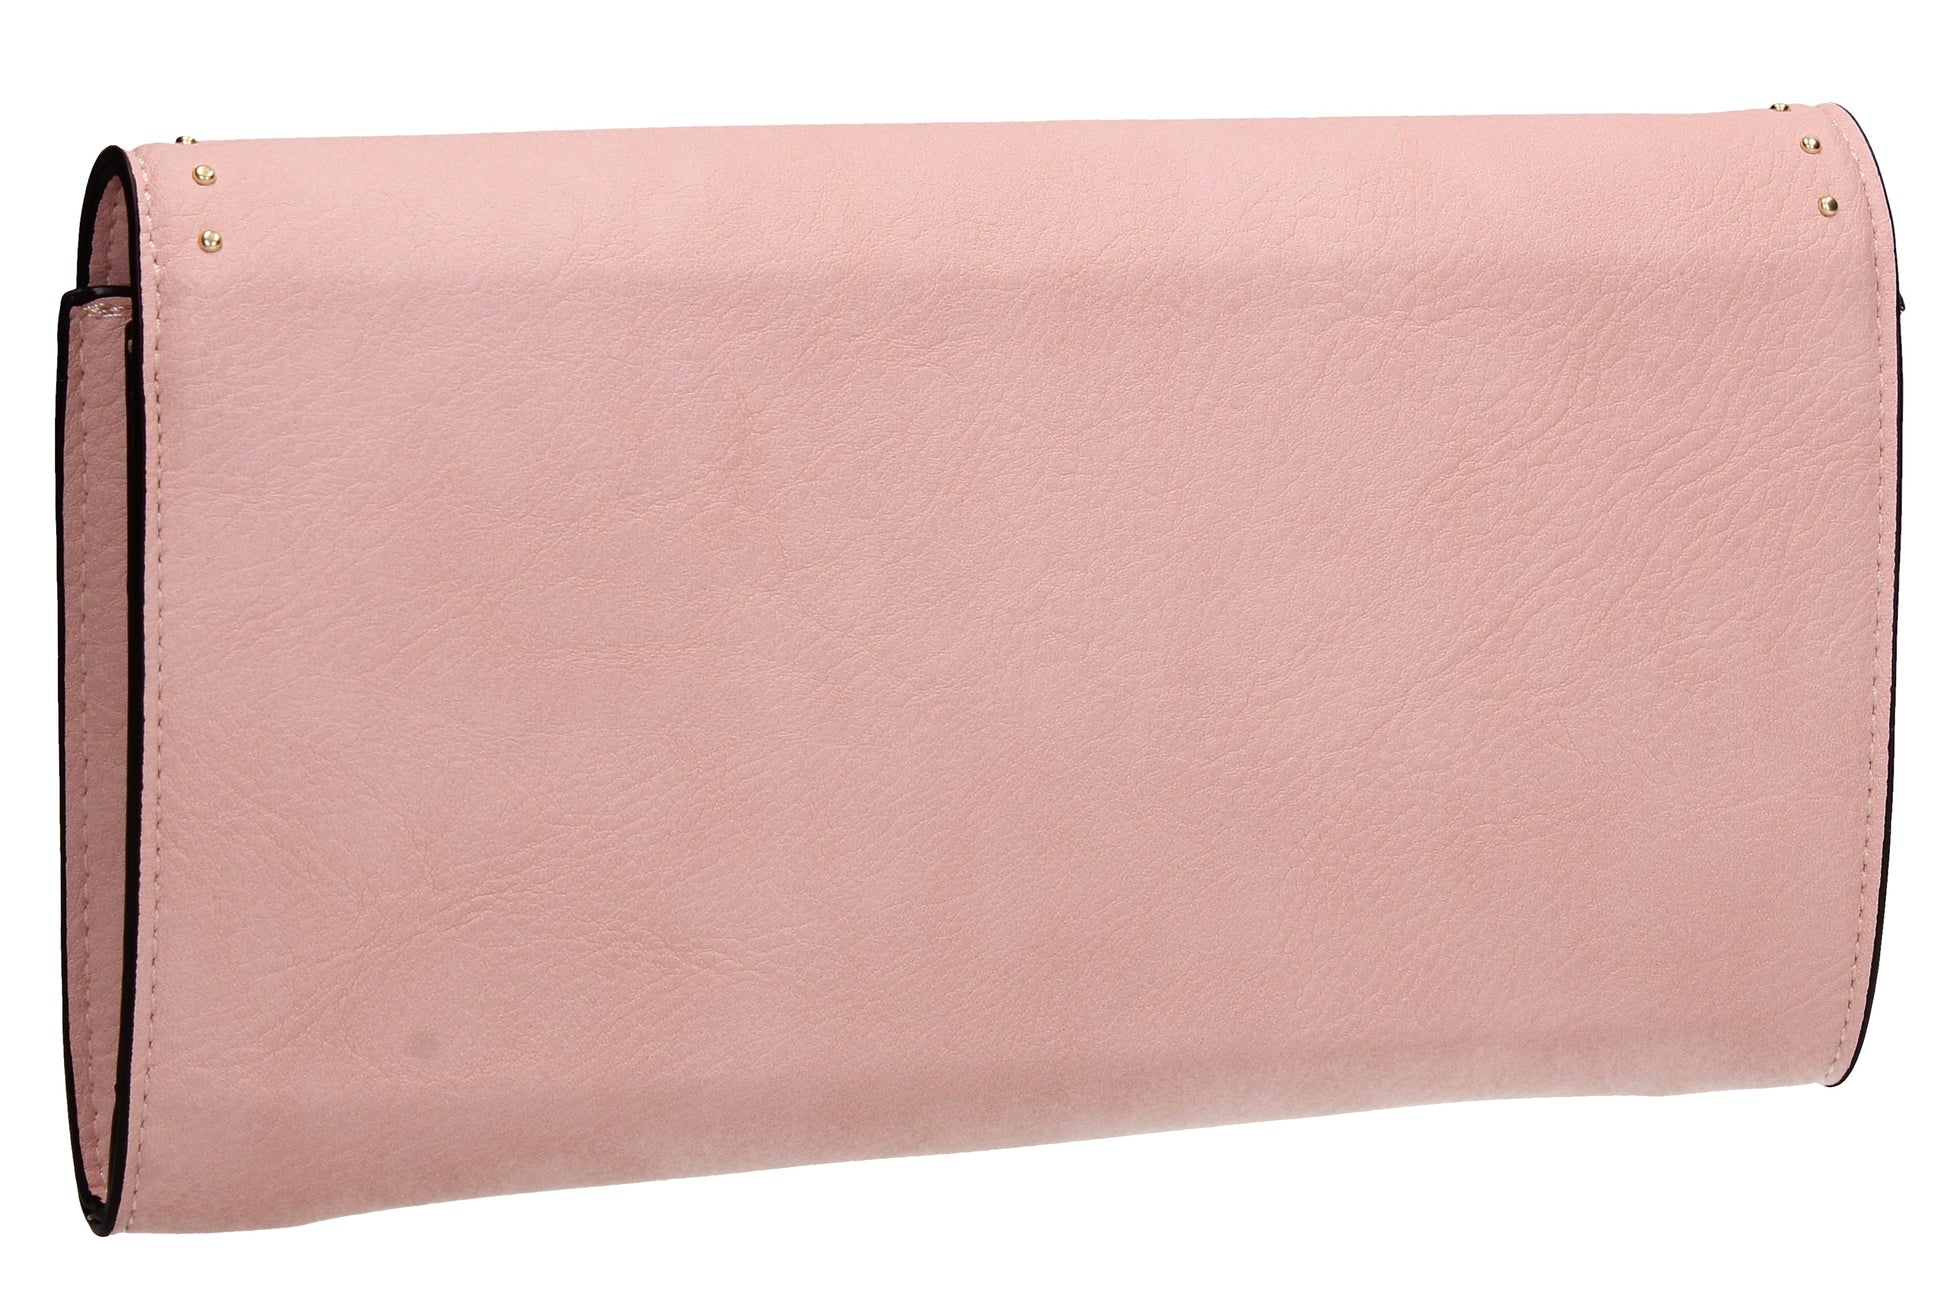 SWANKYSWANS Shannon Clutch Bag Pink Cute Cheap Clutch Bag For Weddings School and Work